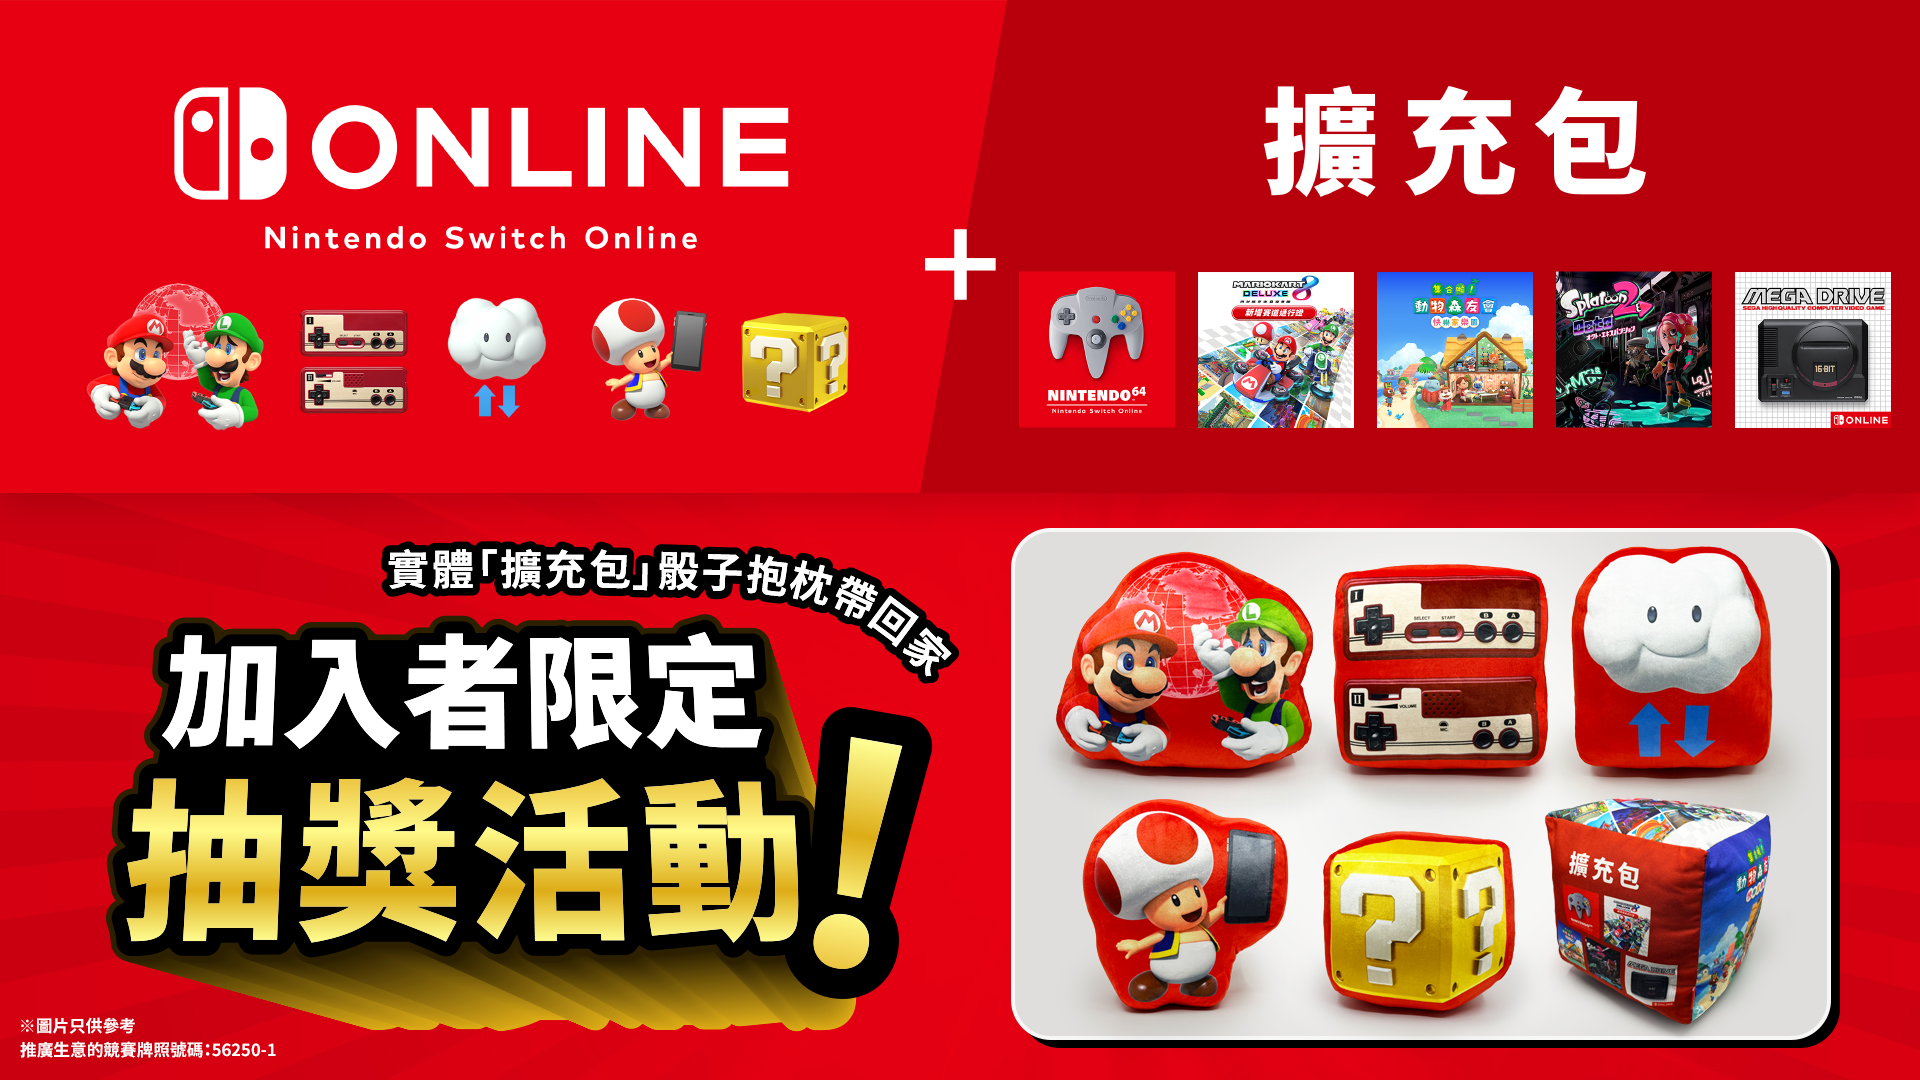 「Nintendo Switch Online + 扩充包」加入者限定抽奖活动现正接受报名！实体「扩充包」骰子抱枕带回家